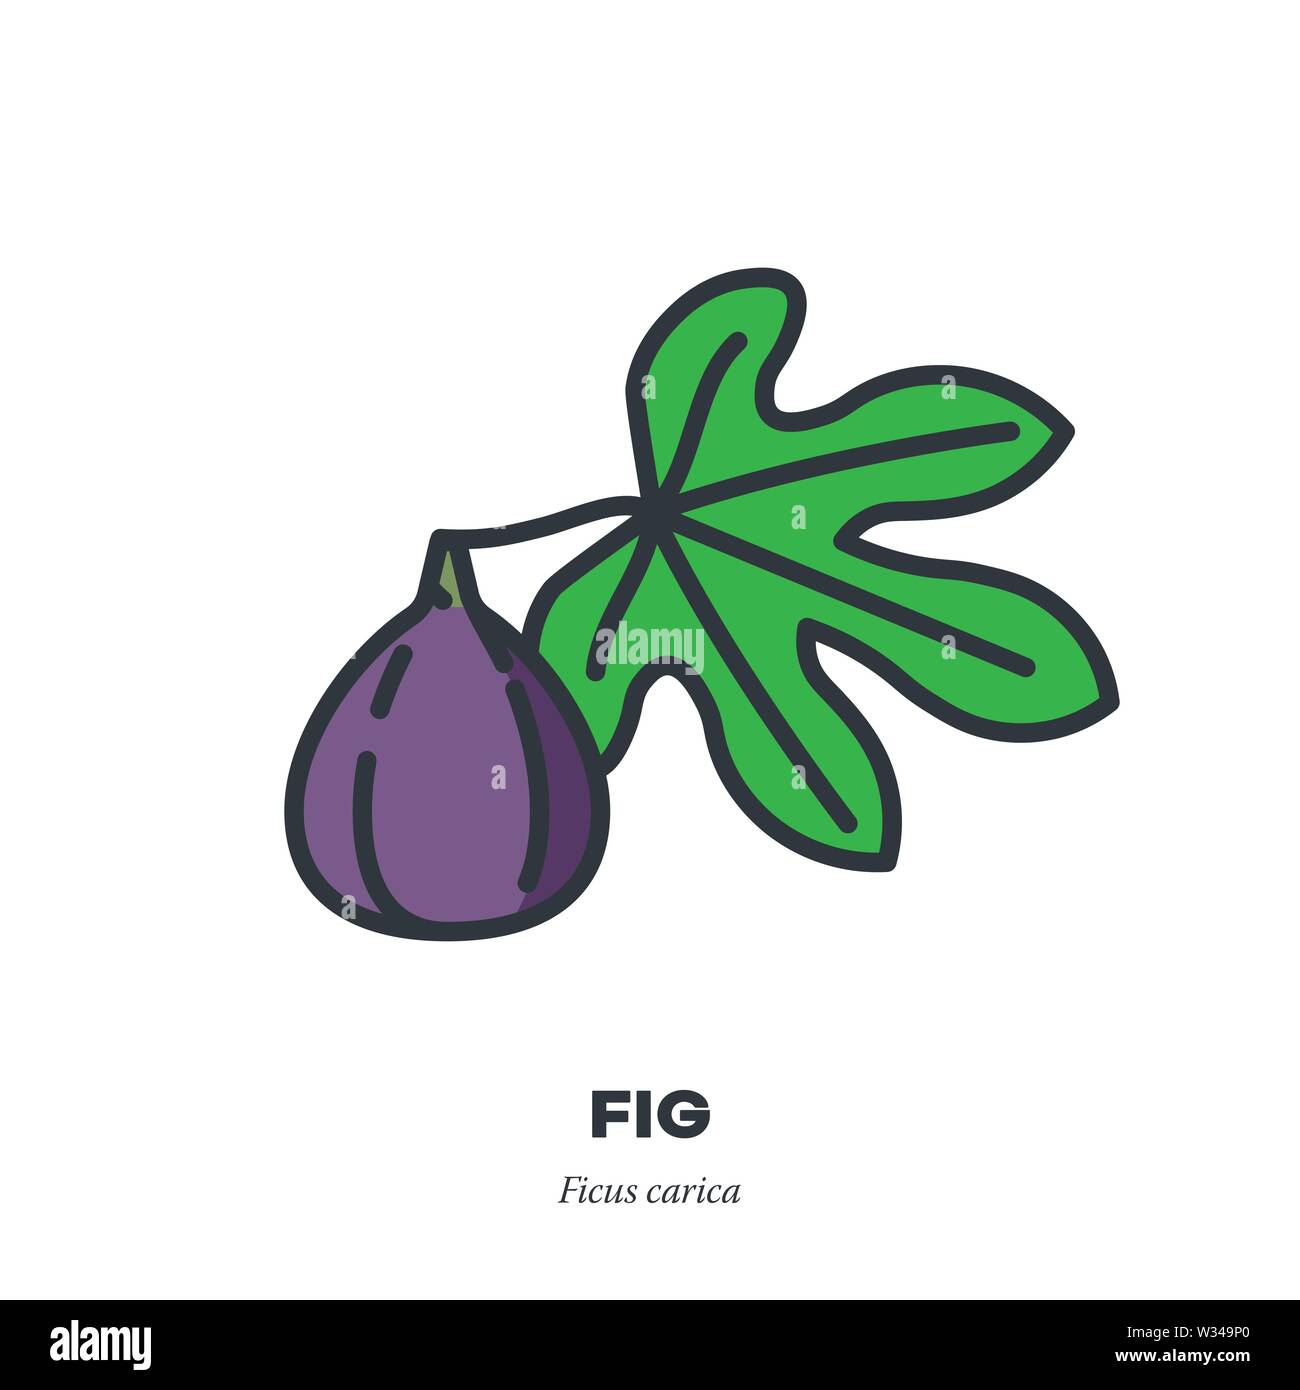 Abb. Obst Symbol, Umriss mit Farbe füllen Stil Vektor-illustration, Früchte und Blätter Stock Vektor